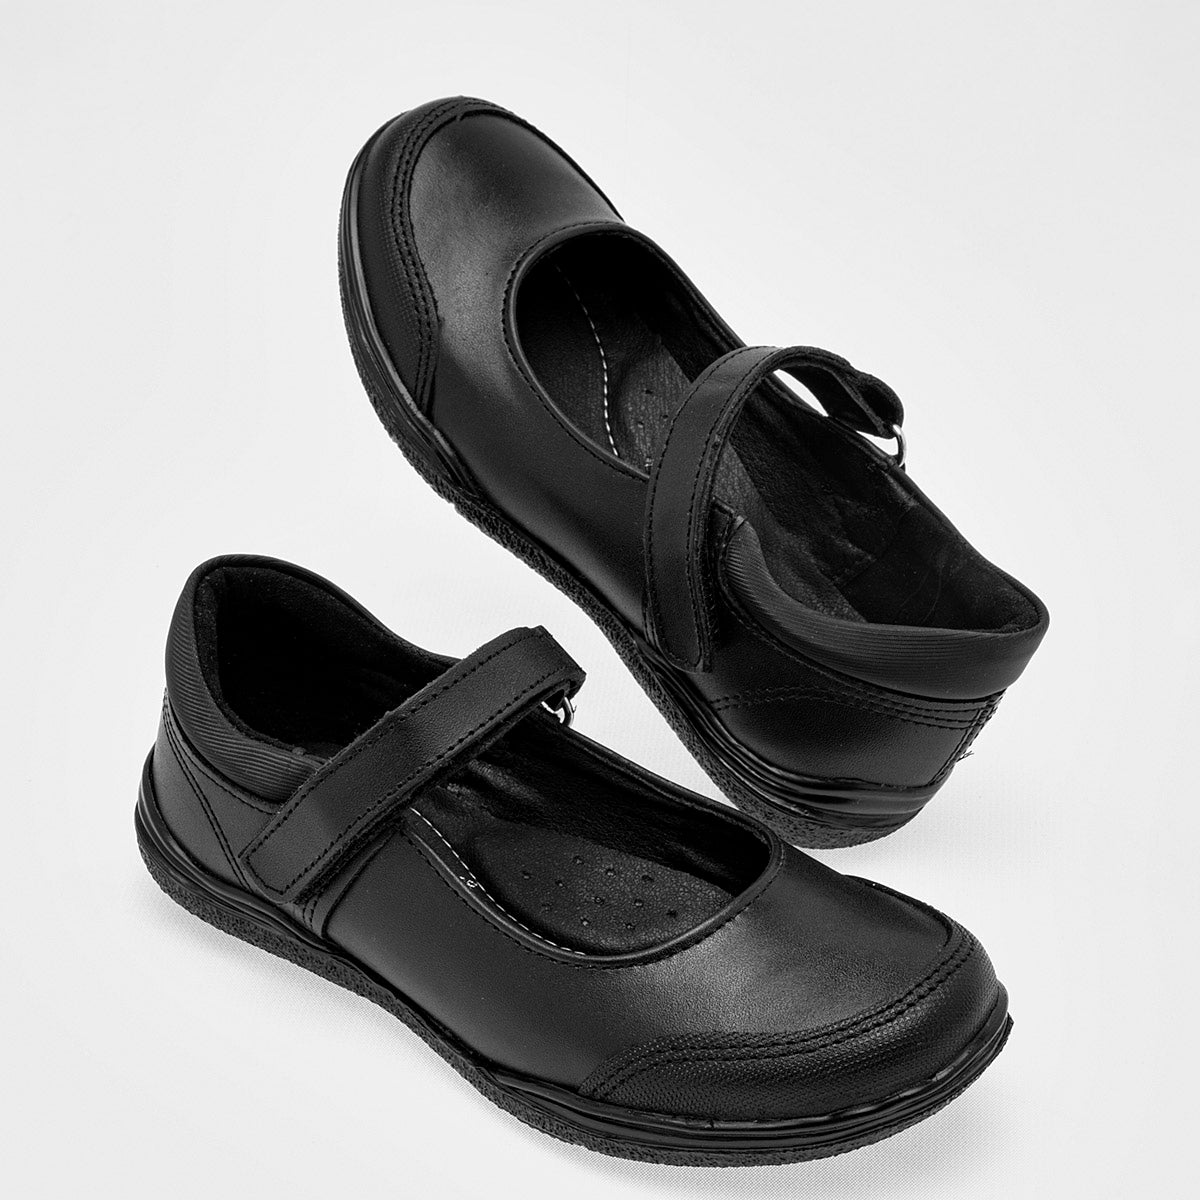 Pakar.com - Mayo: Regalos para mamá | Zapato para niña cod-113627